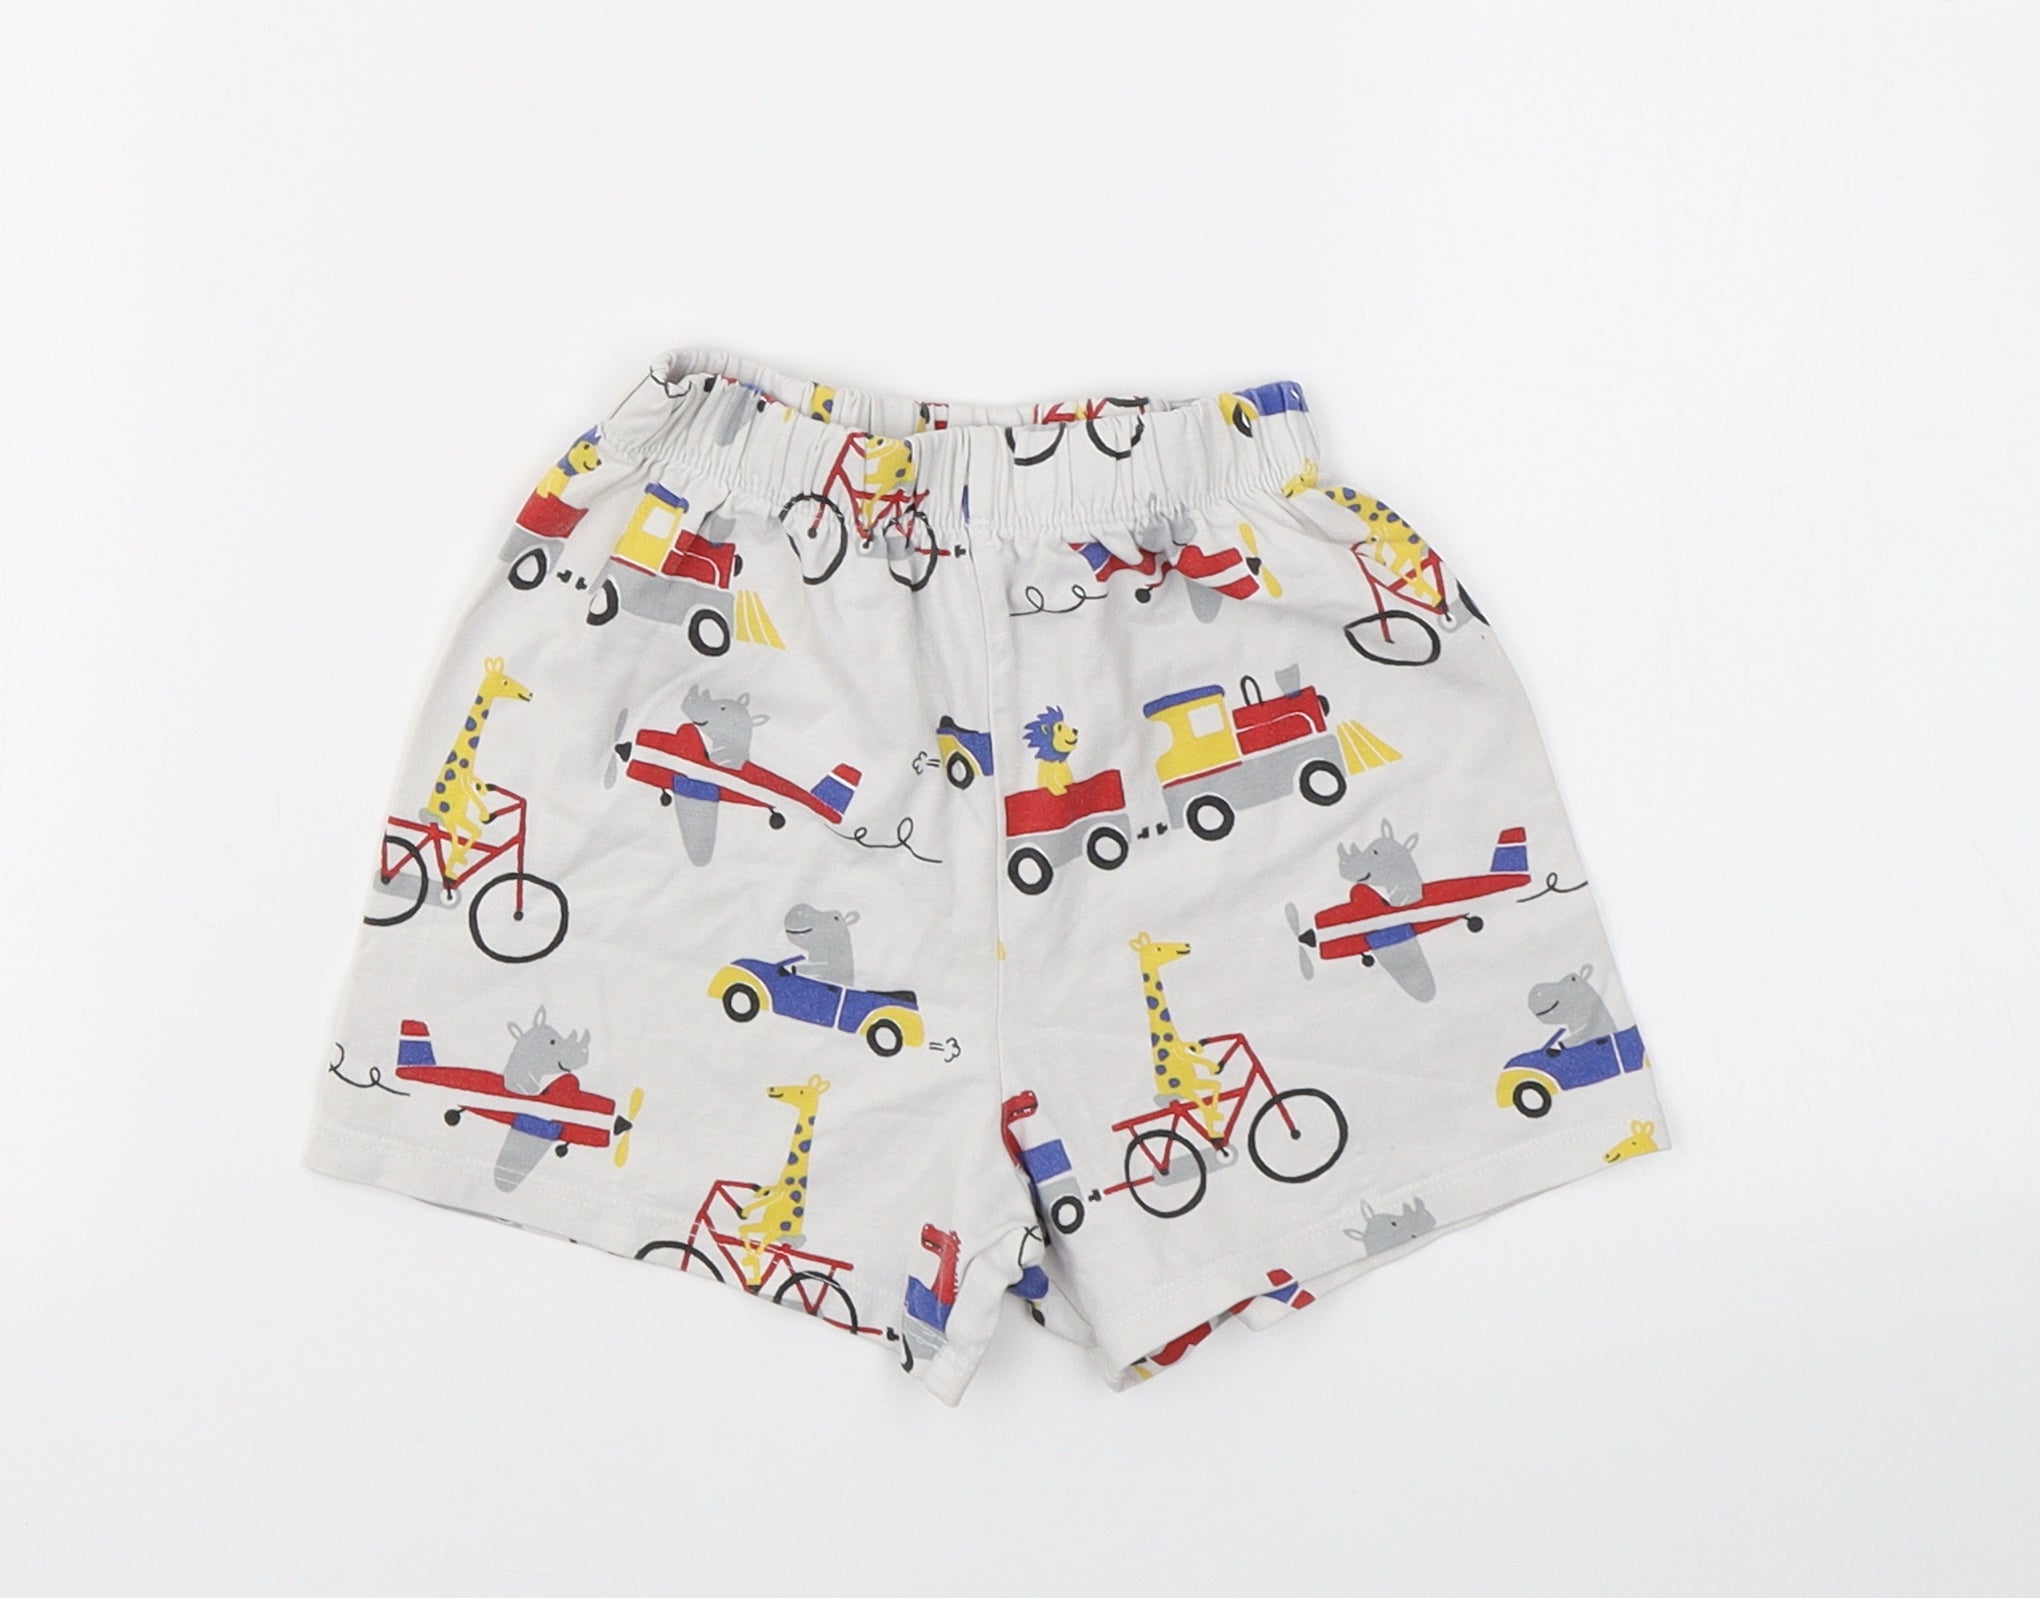 Buy Multicolored Pyjamas  Shorts for Women by FFLIRTYGO Online  Ajiocom